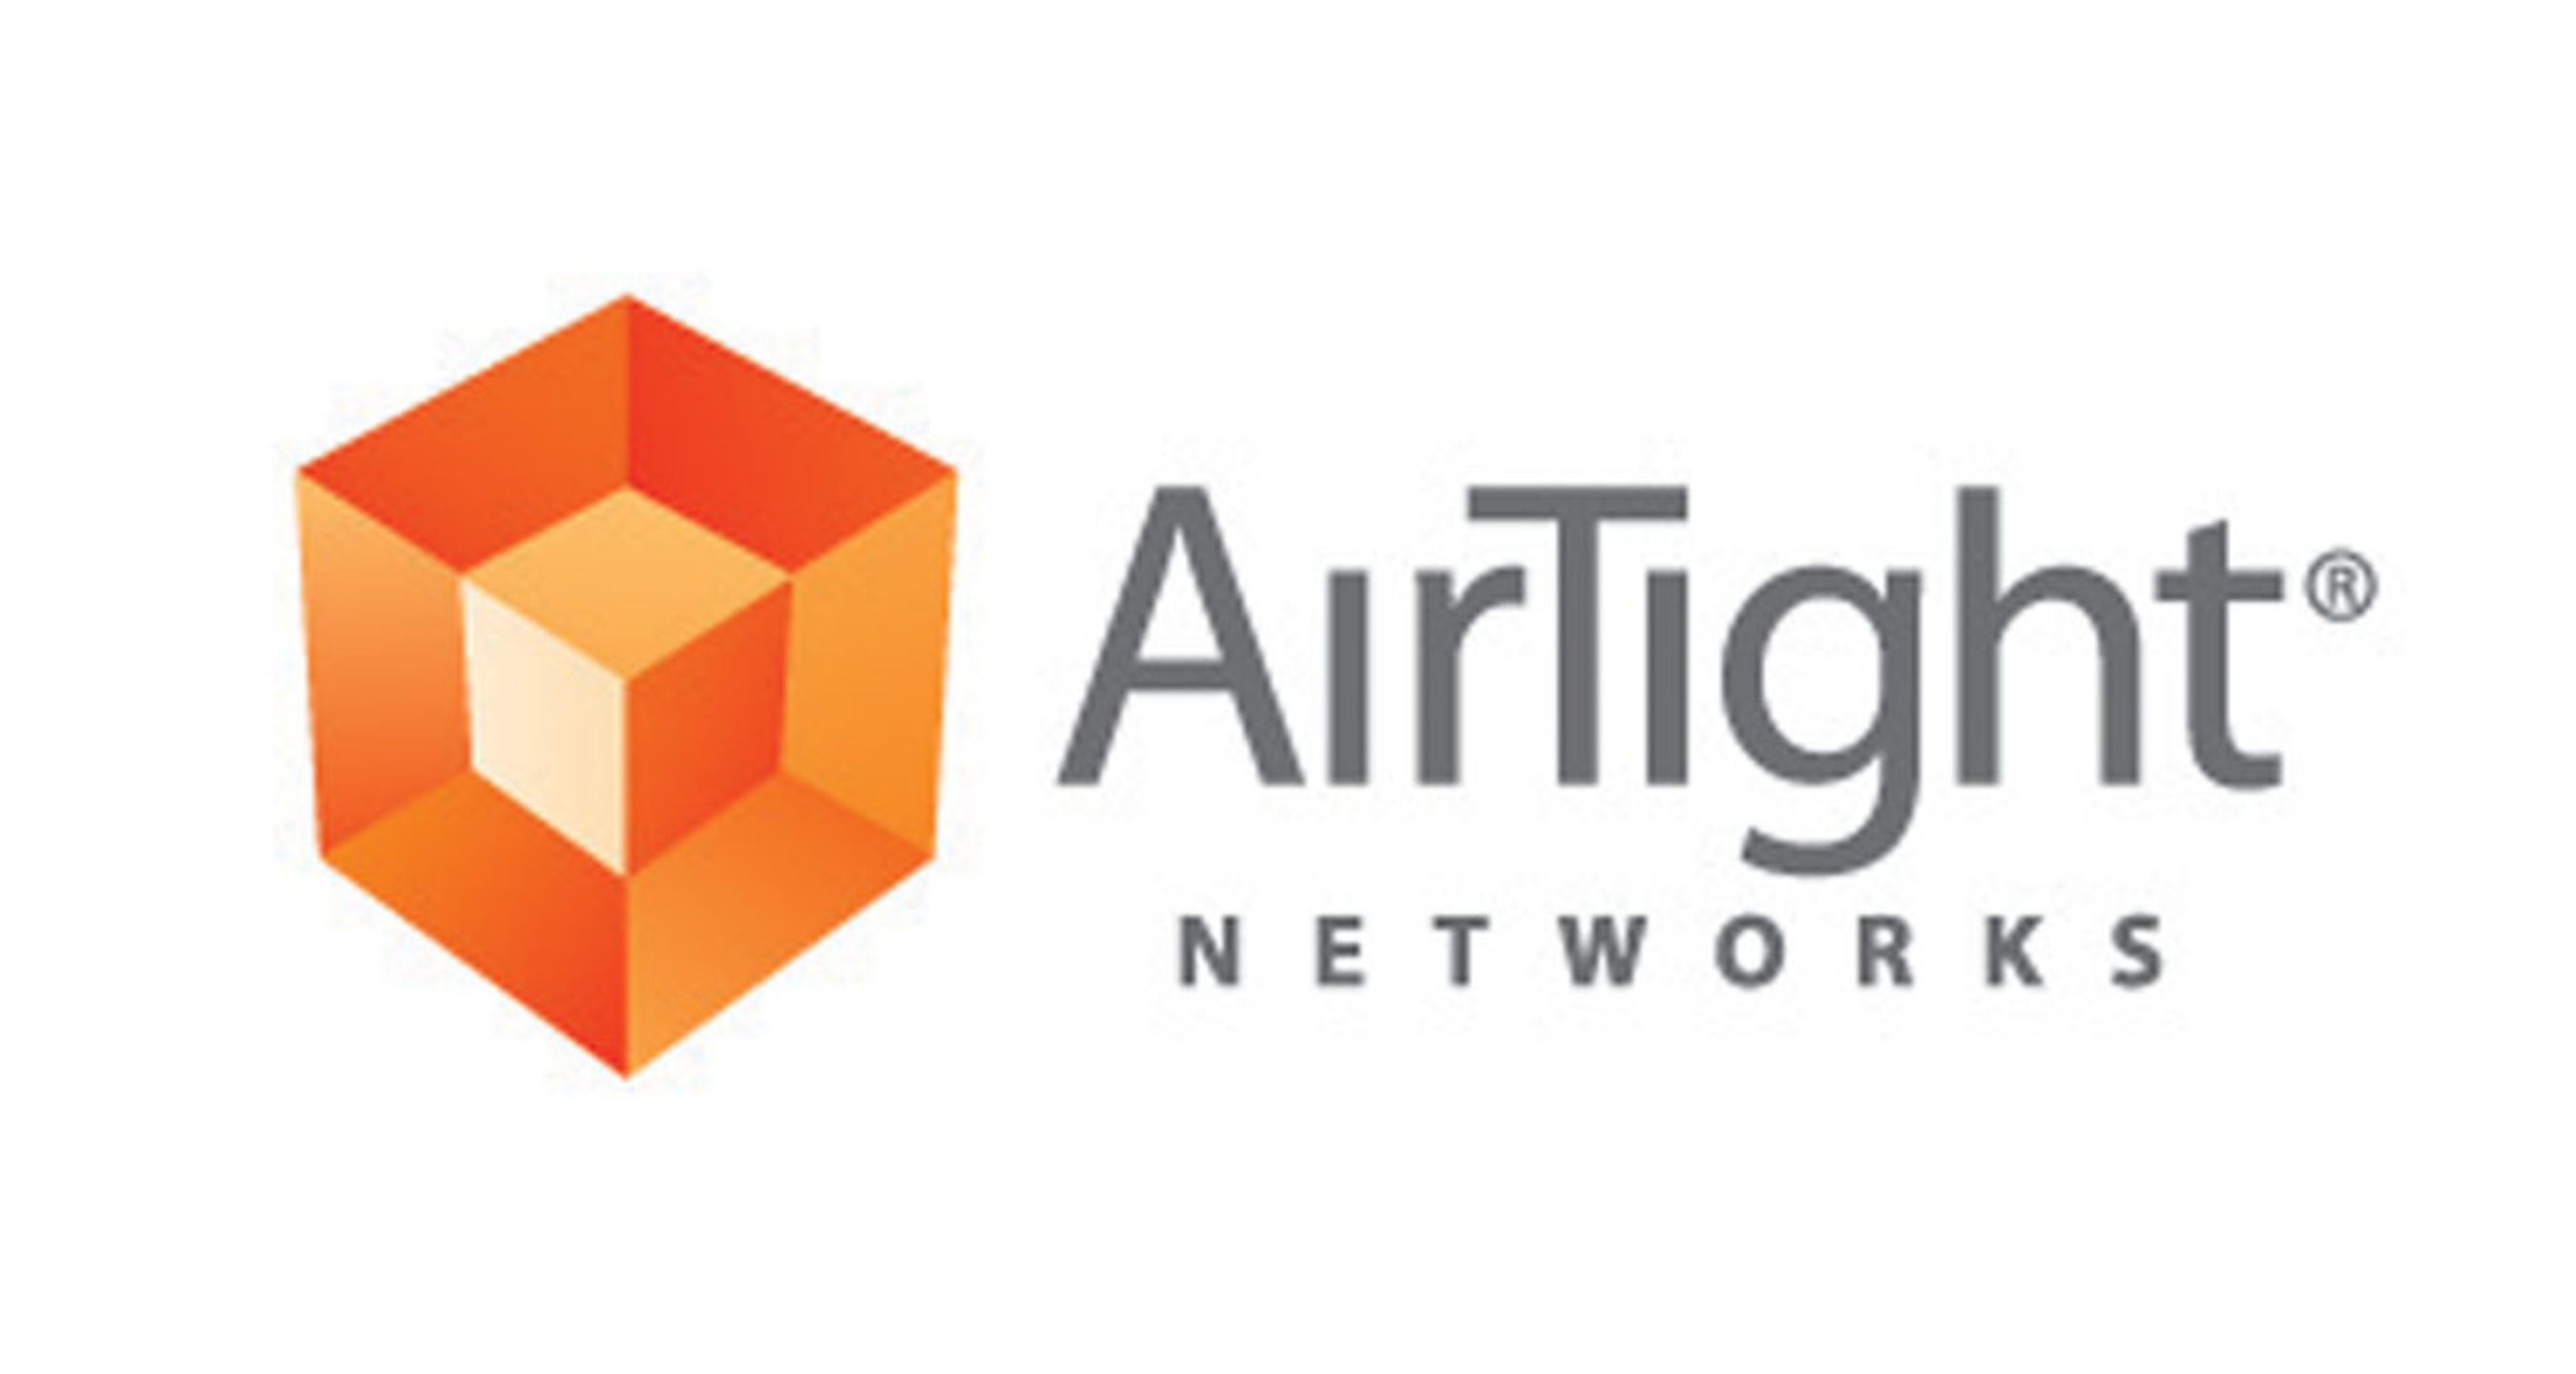 AirTight Networks logo.